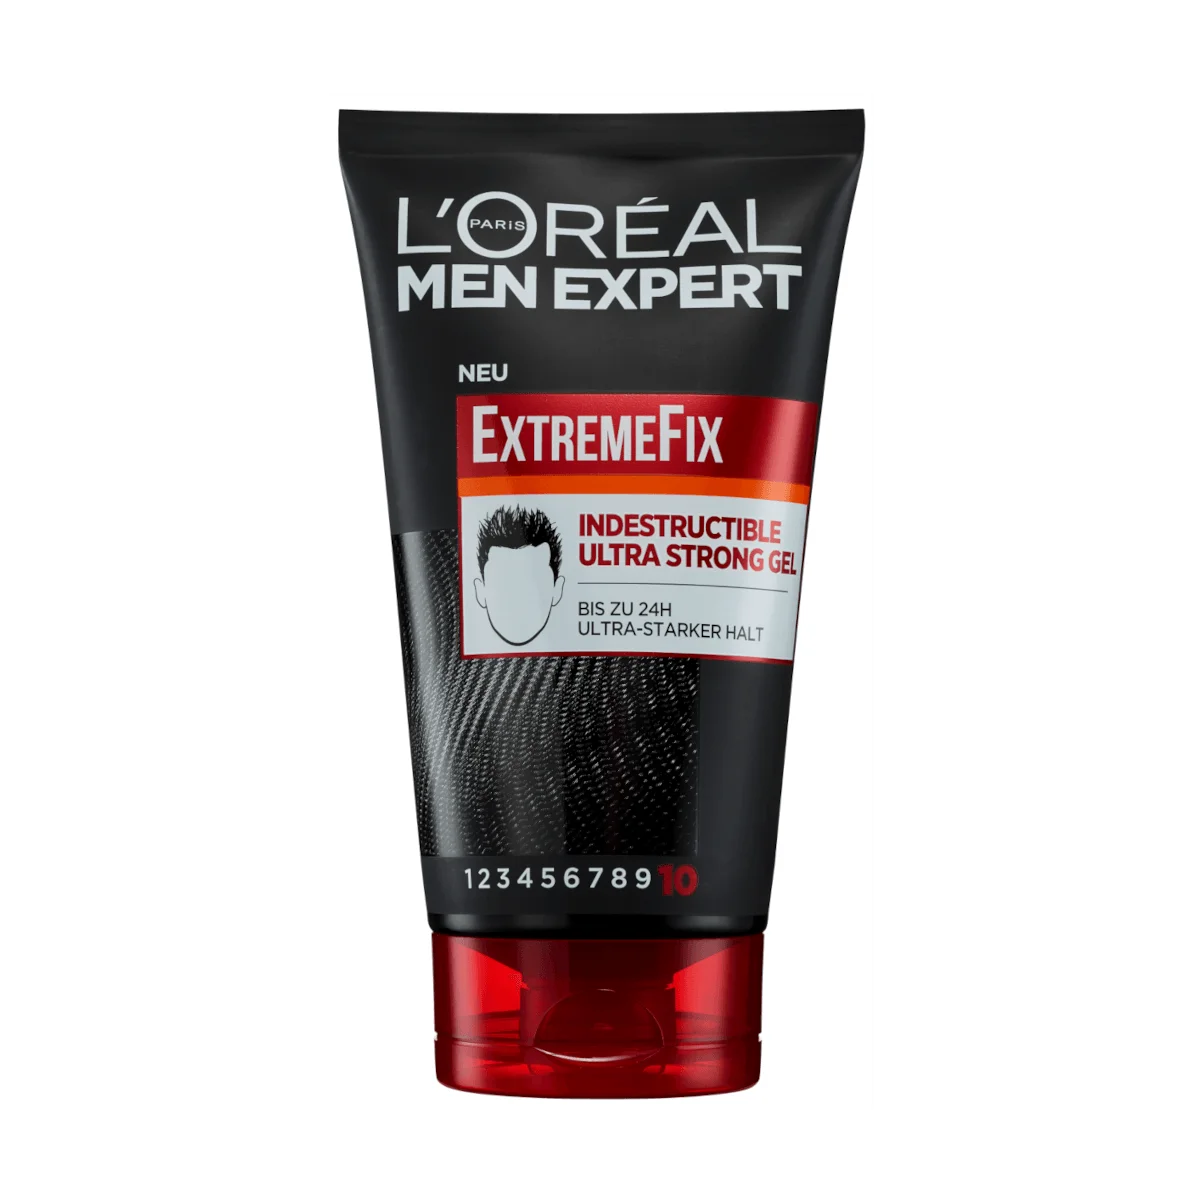 L’Oréal Paris Men Expert Extreme Fix Indestructible Ultra Strong Gel, 150 ml